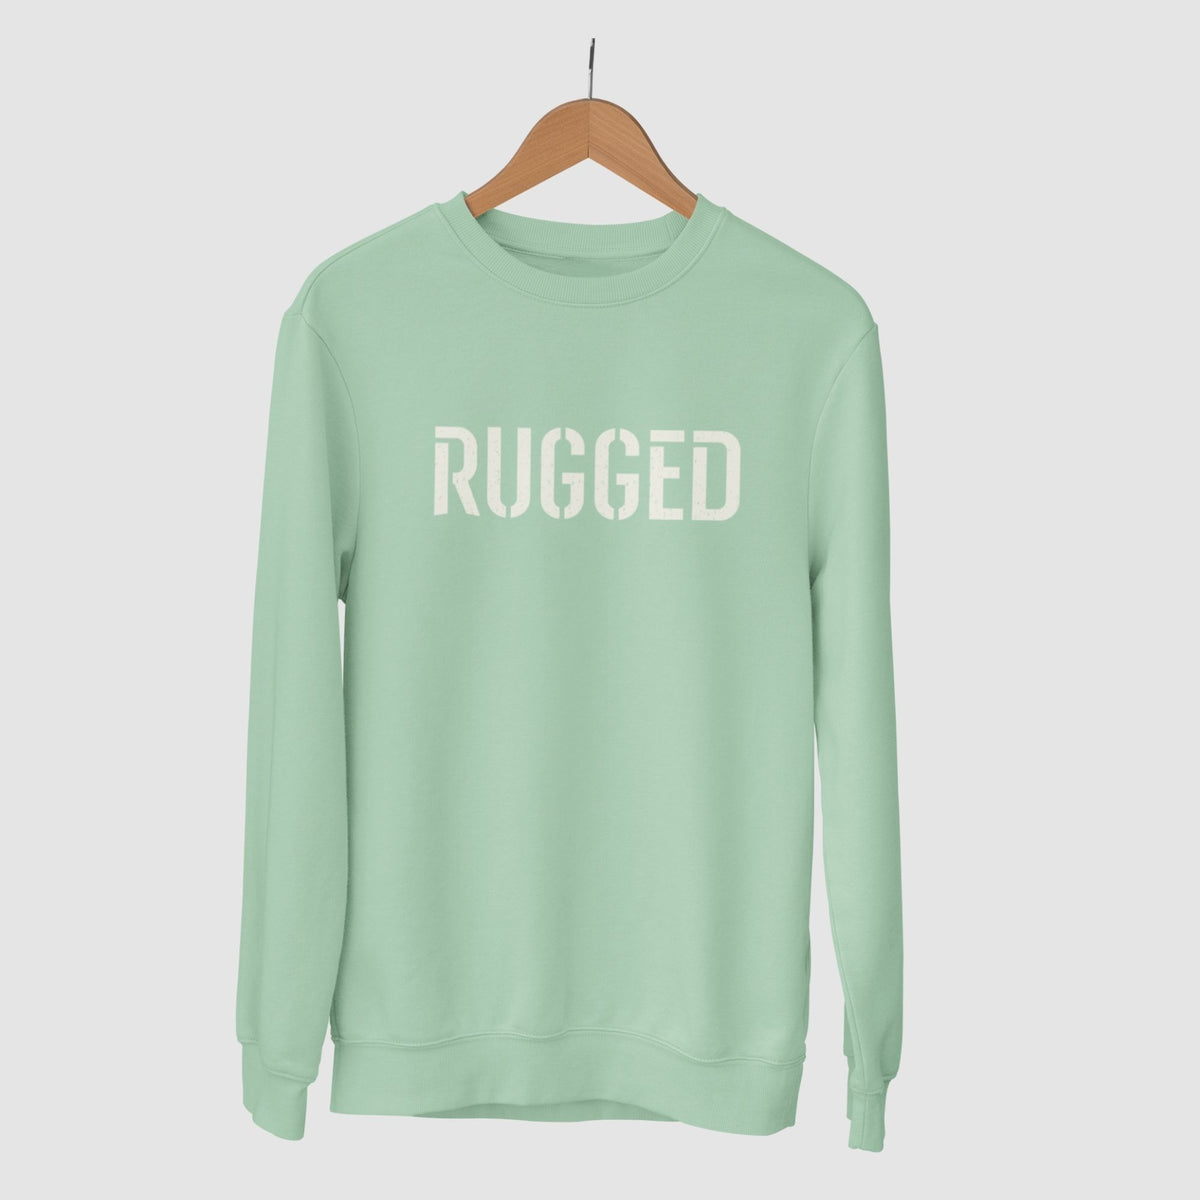 rugged-cotton-printed-unisex-mint-sweatshirt-gogirgit-com